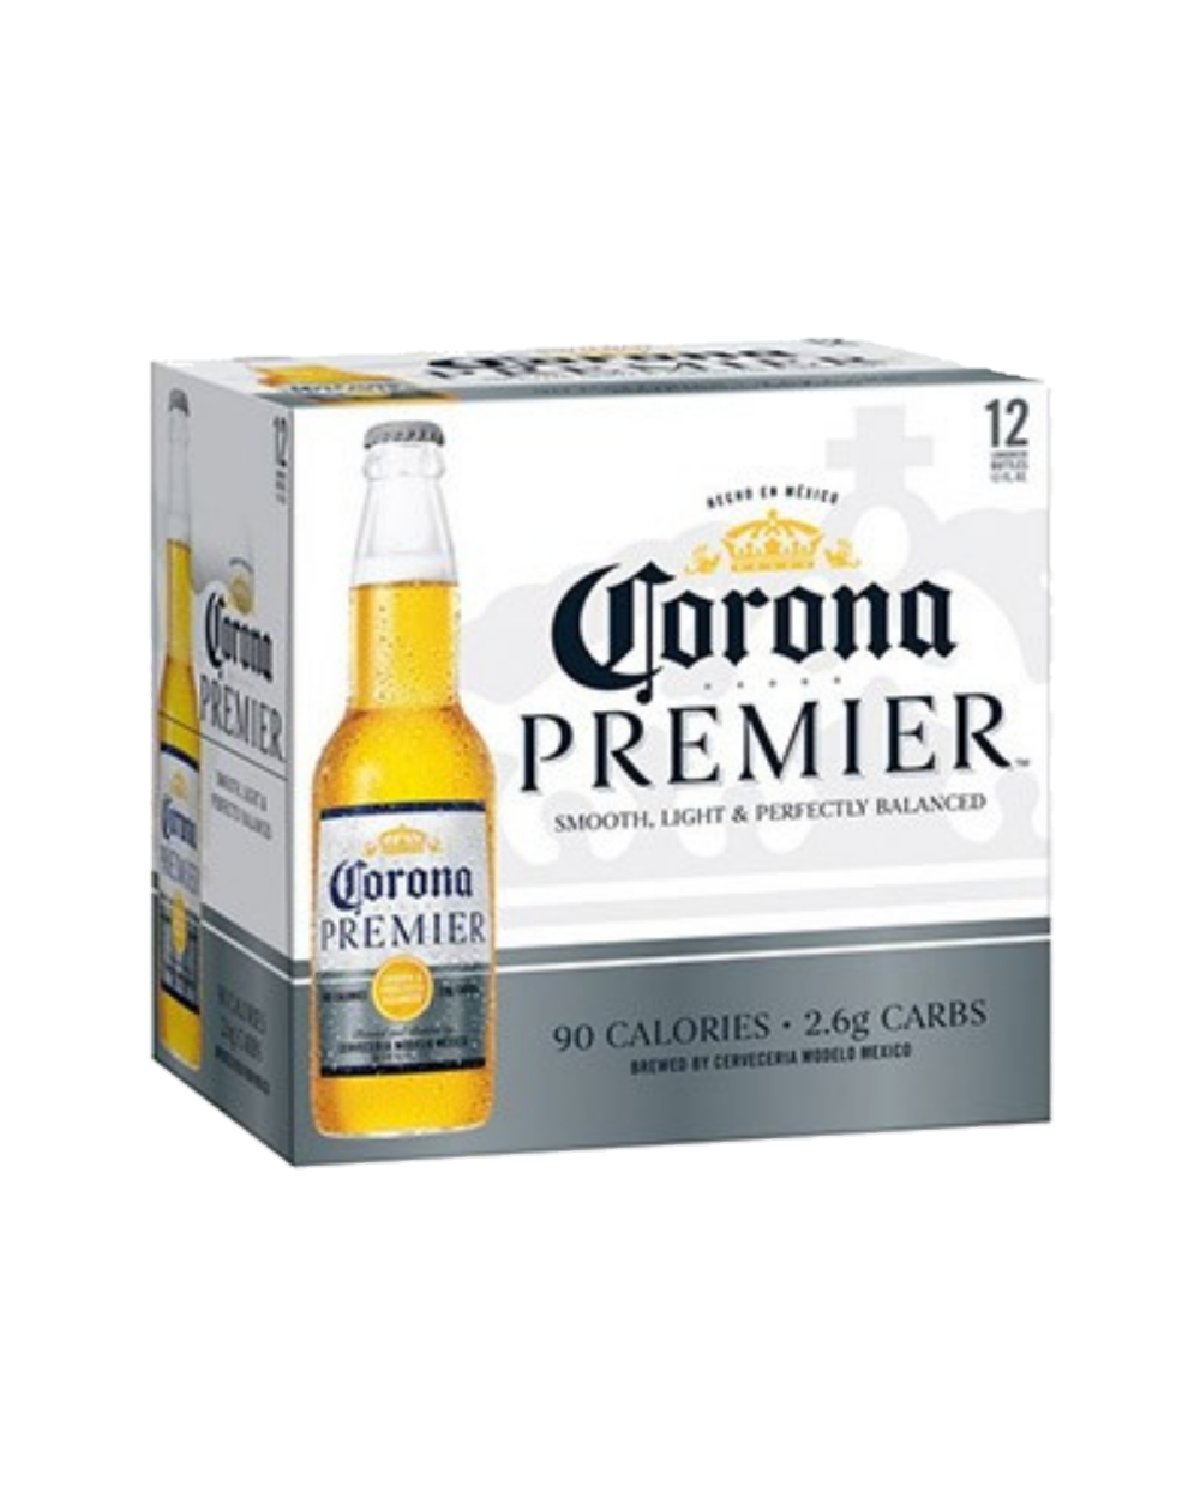 Corona Premier 12pk Bottles